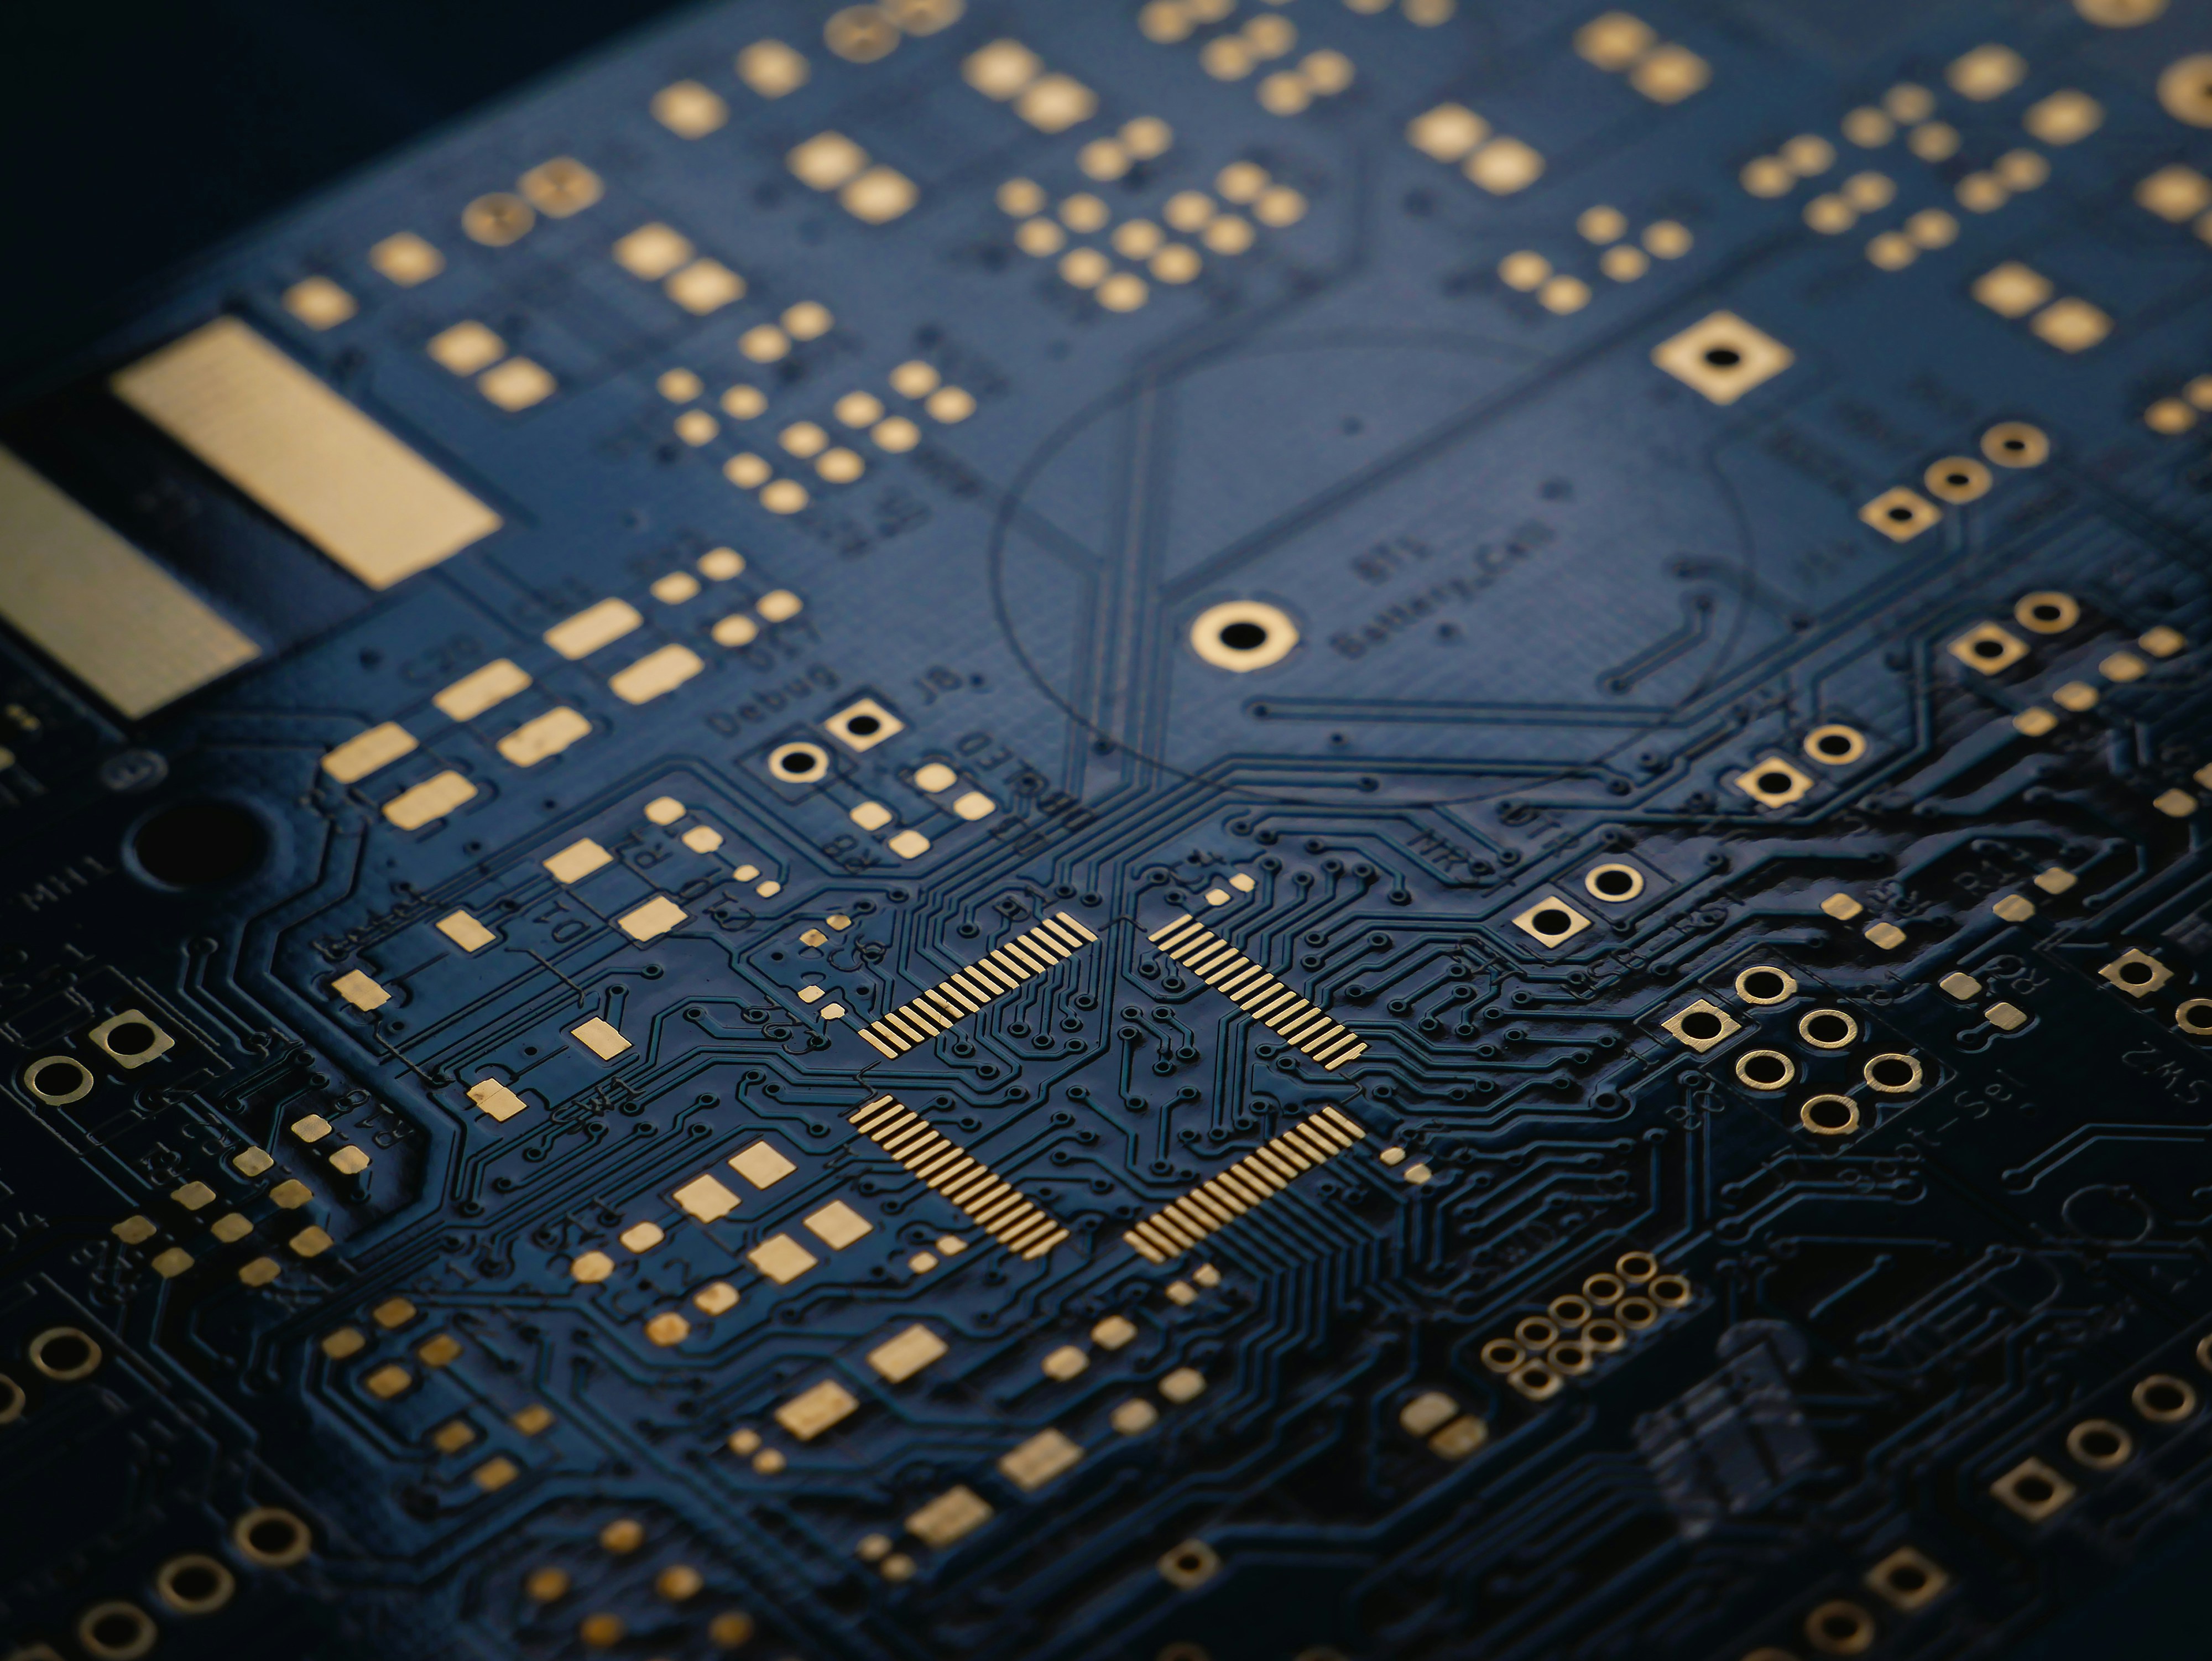 Wonderinterest | Μια επανάσταση στην τεχνητή νοημοσύνη: Το νέο υπερ-τσιπ της Nvidia μπορεί να αλλάξει τον κόσμο